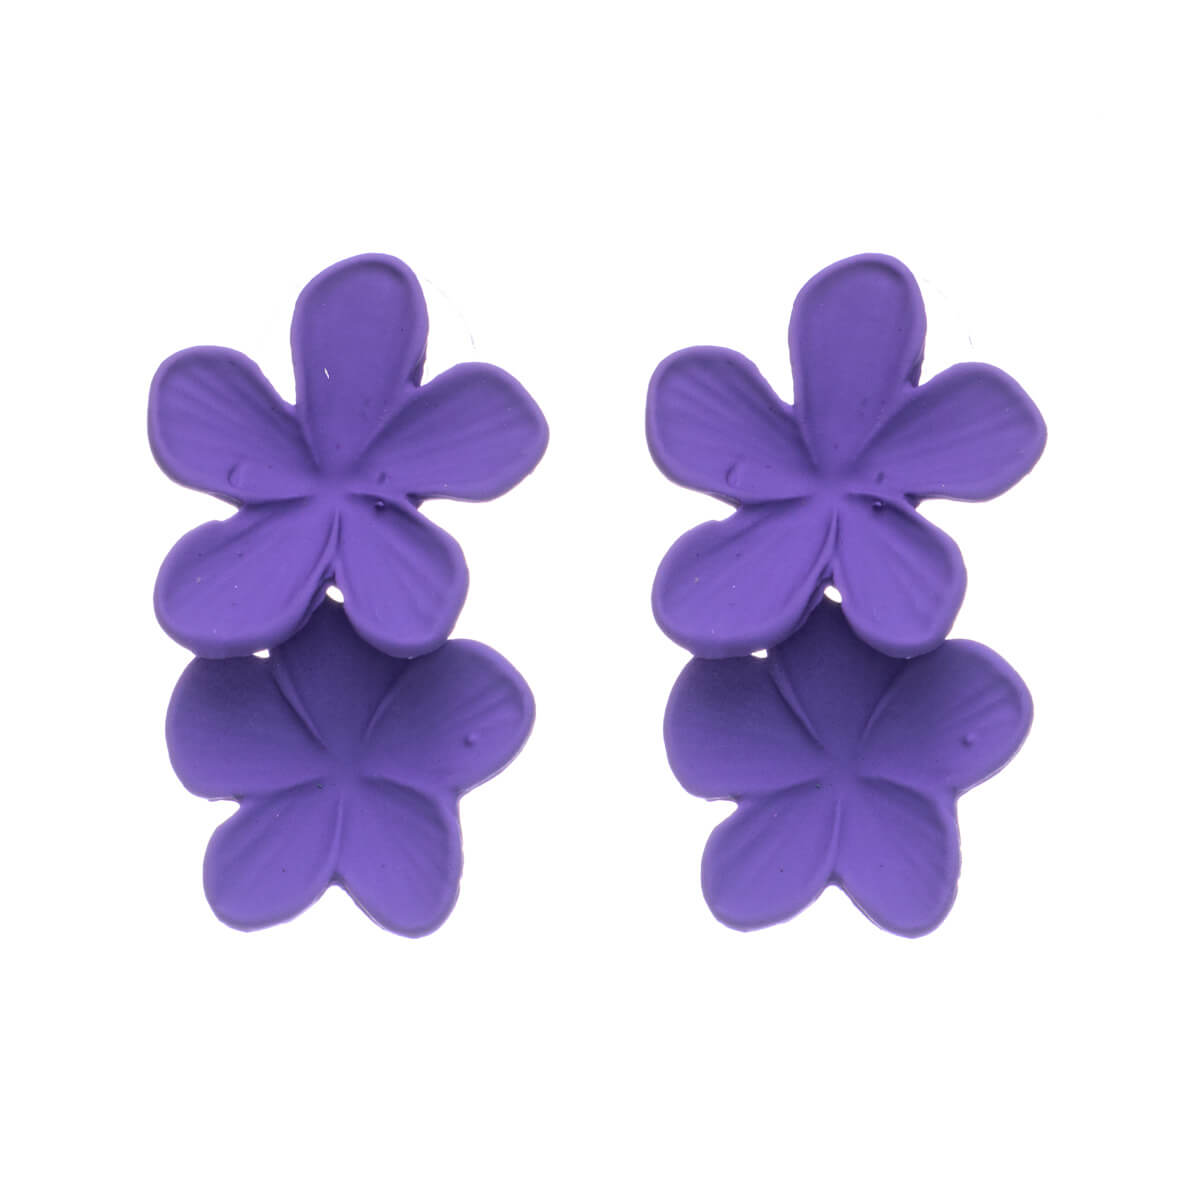 Two flowers hanging earrings